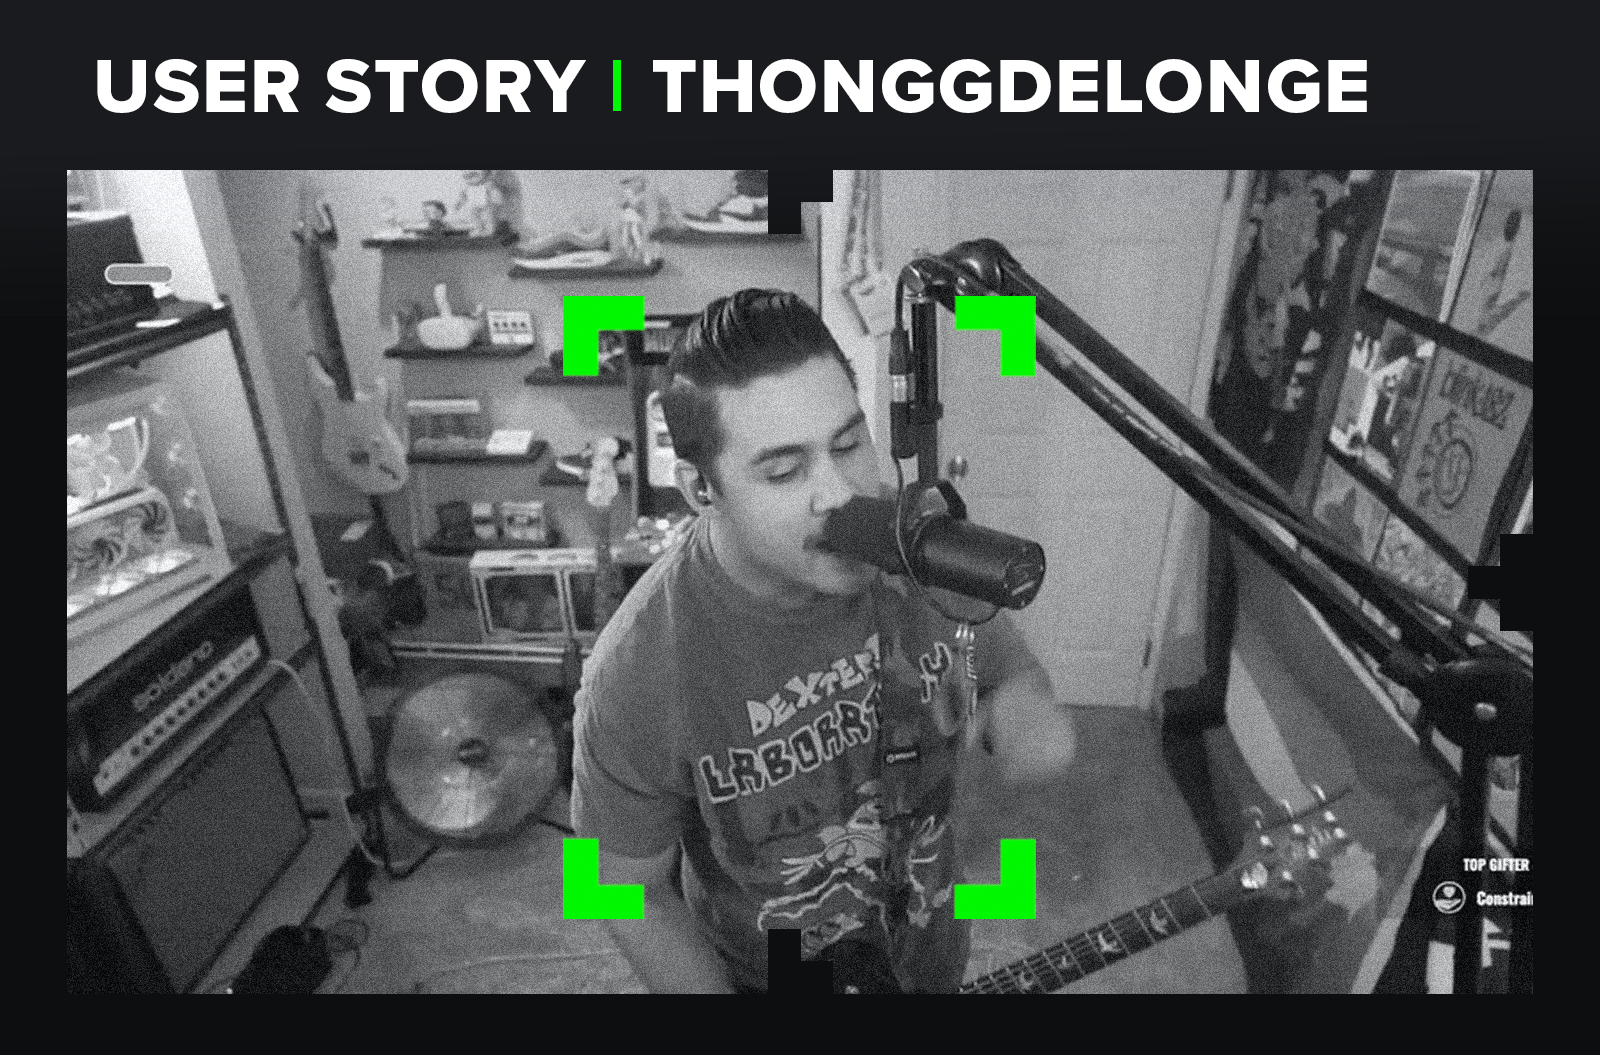 ThonggDeLonge - User Story